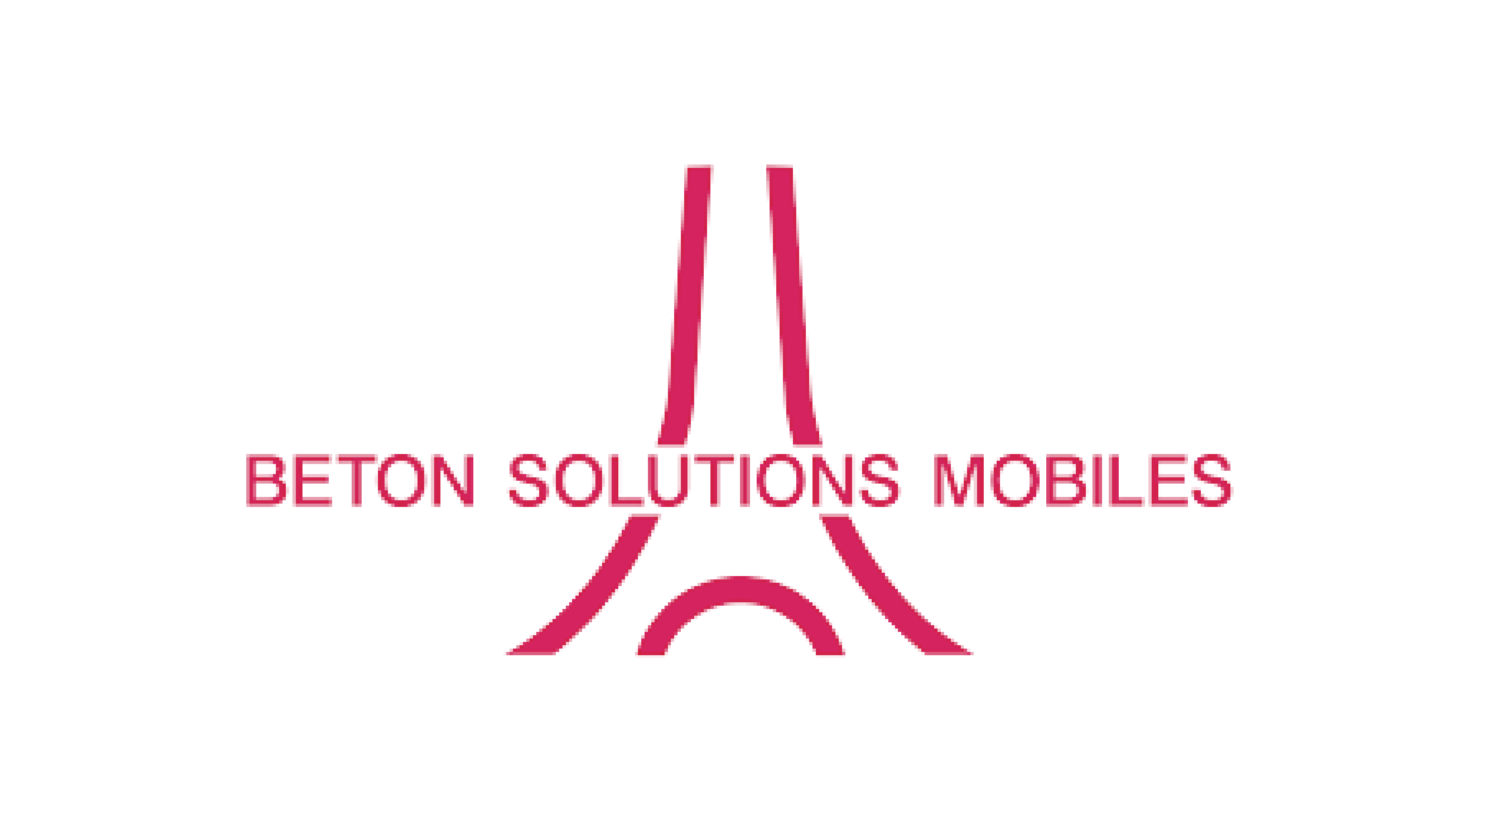 BETON SOLUTIONS MOBILES